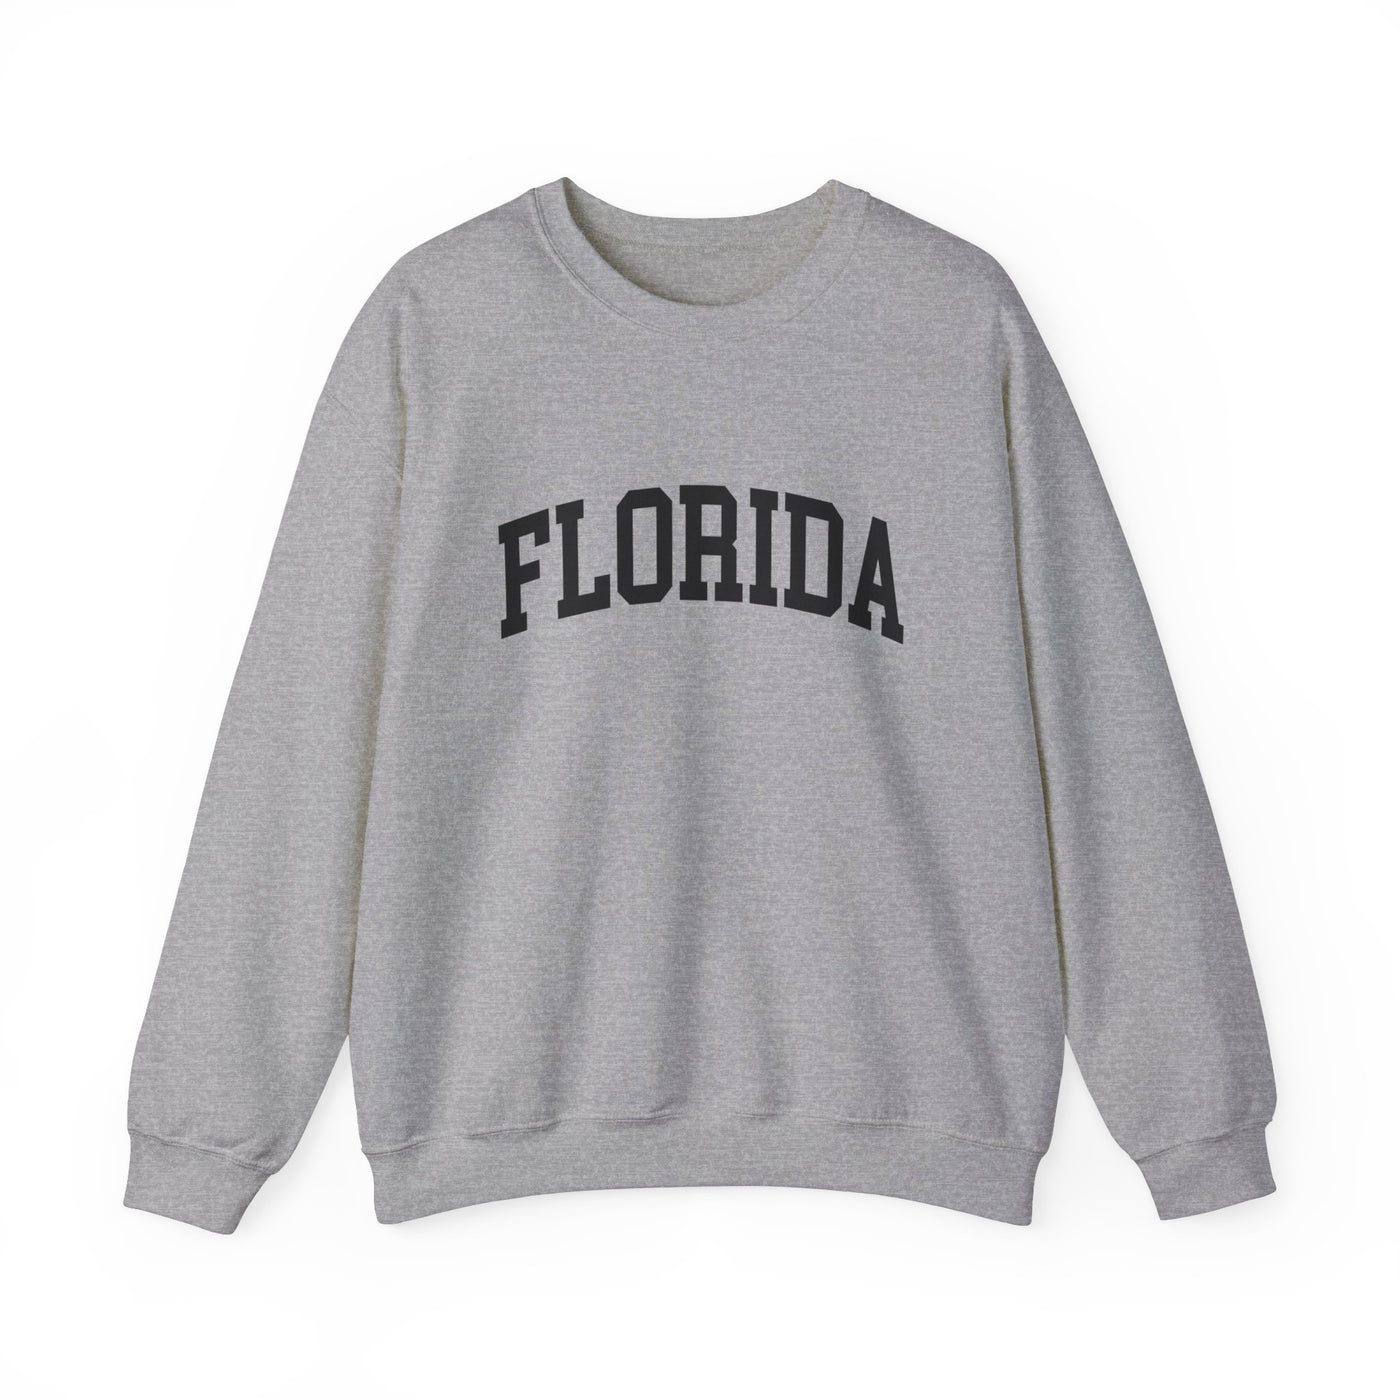 Florida Collegiate Crewneck Sweatshirt